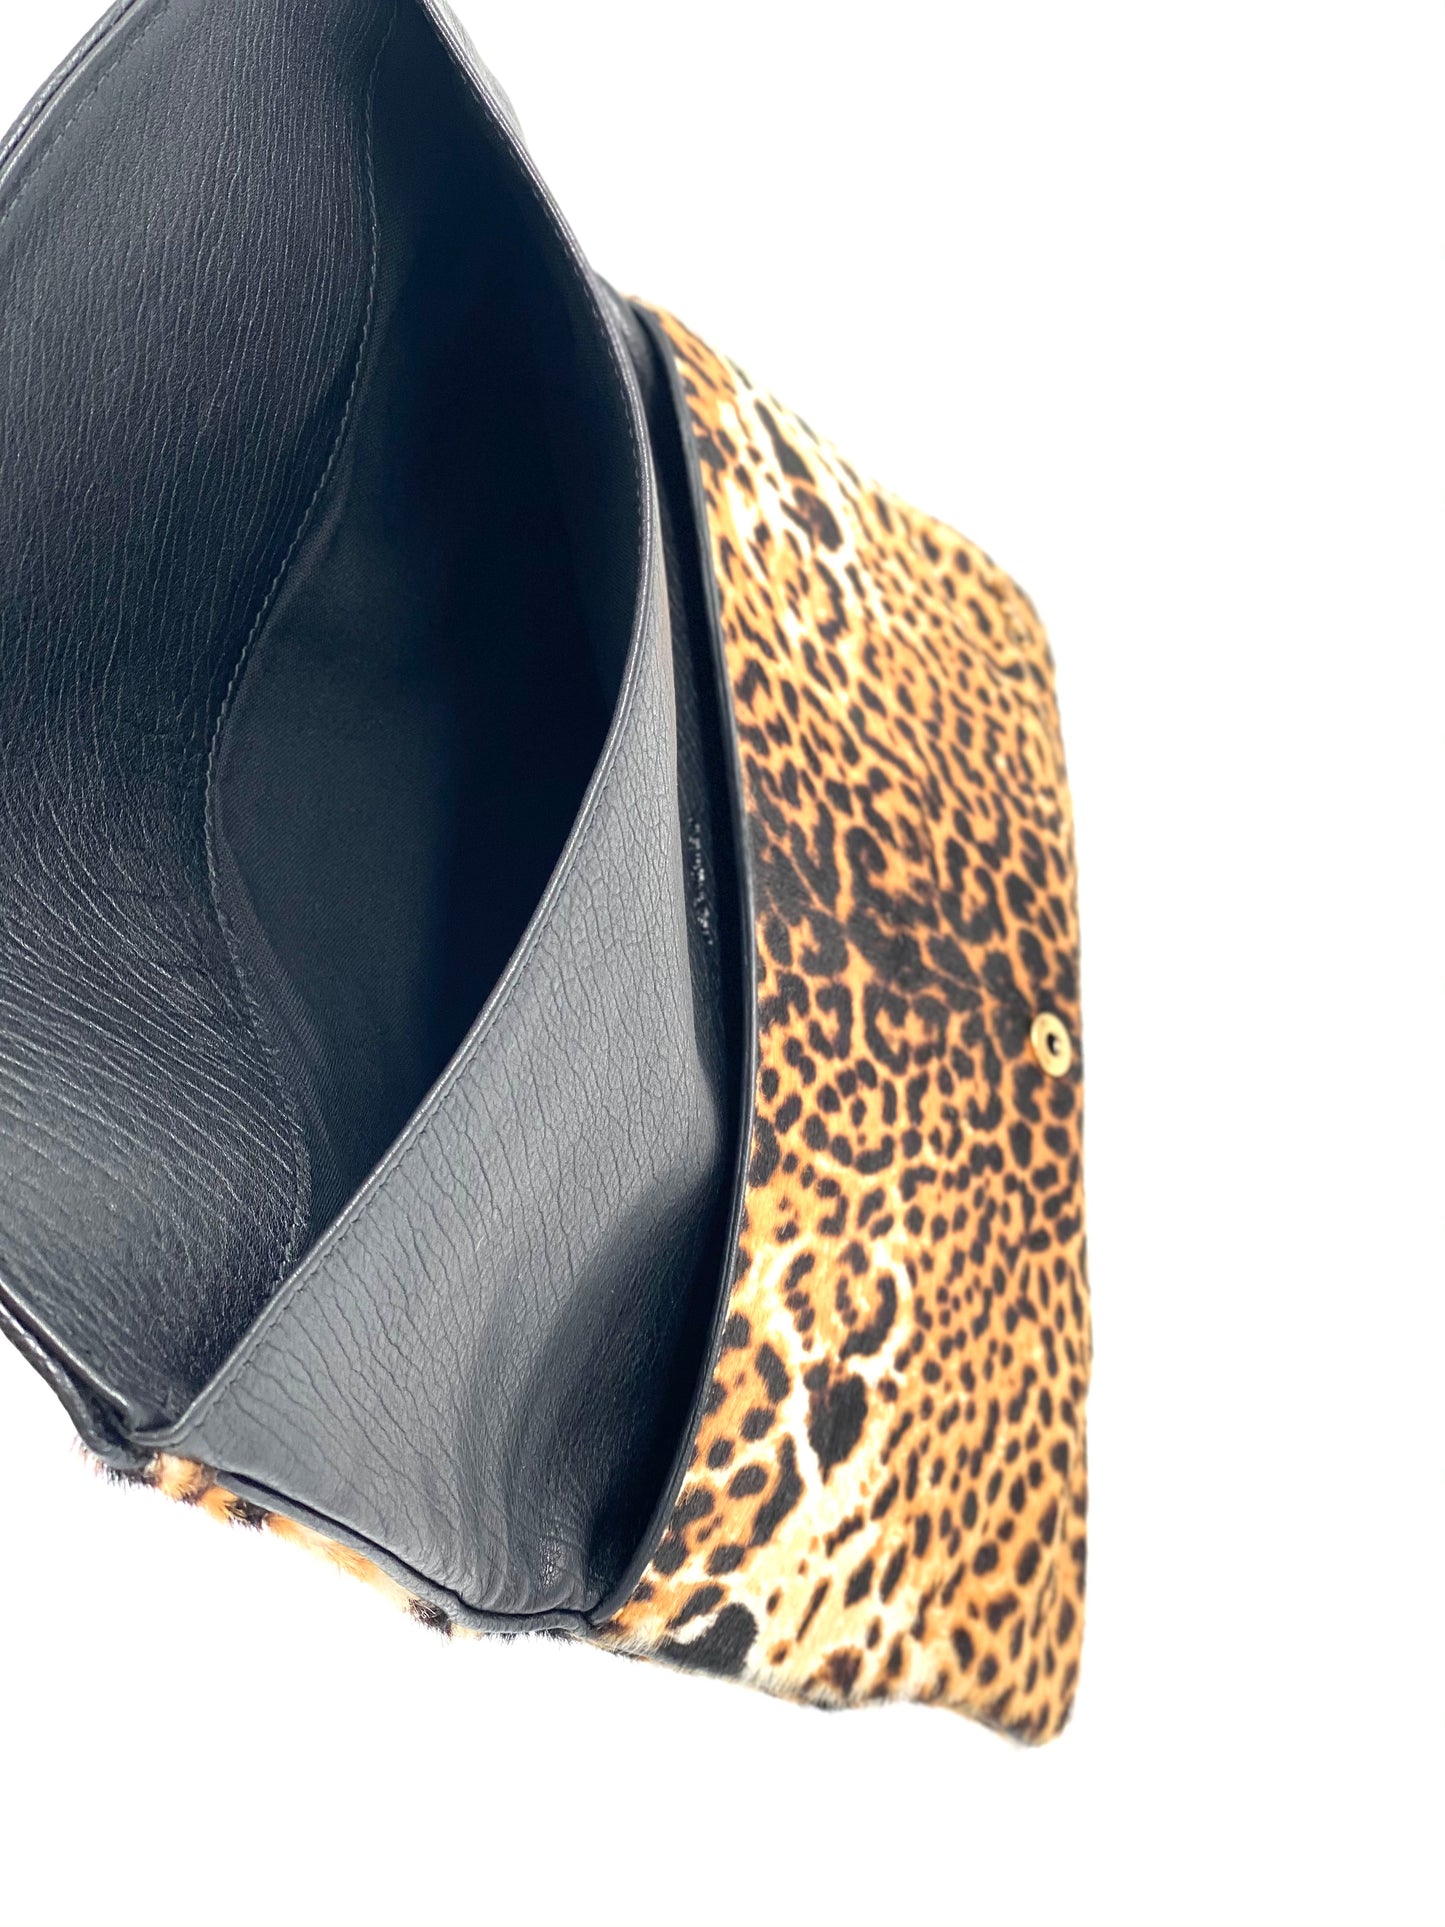 Yves Saint Laurent Animal-print calf hair clutch